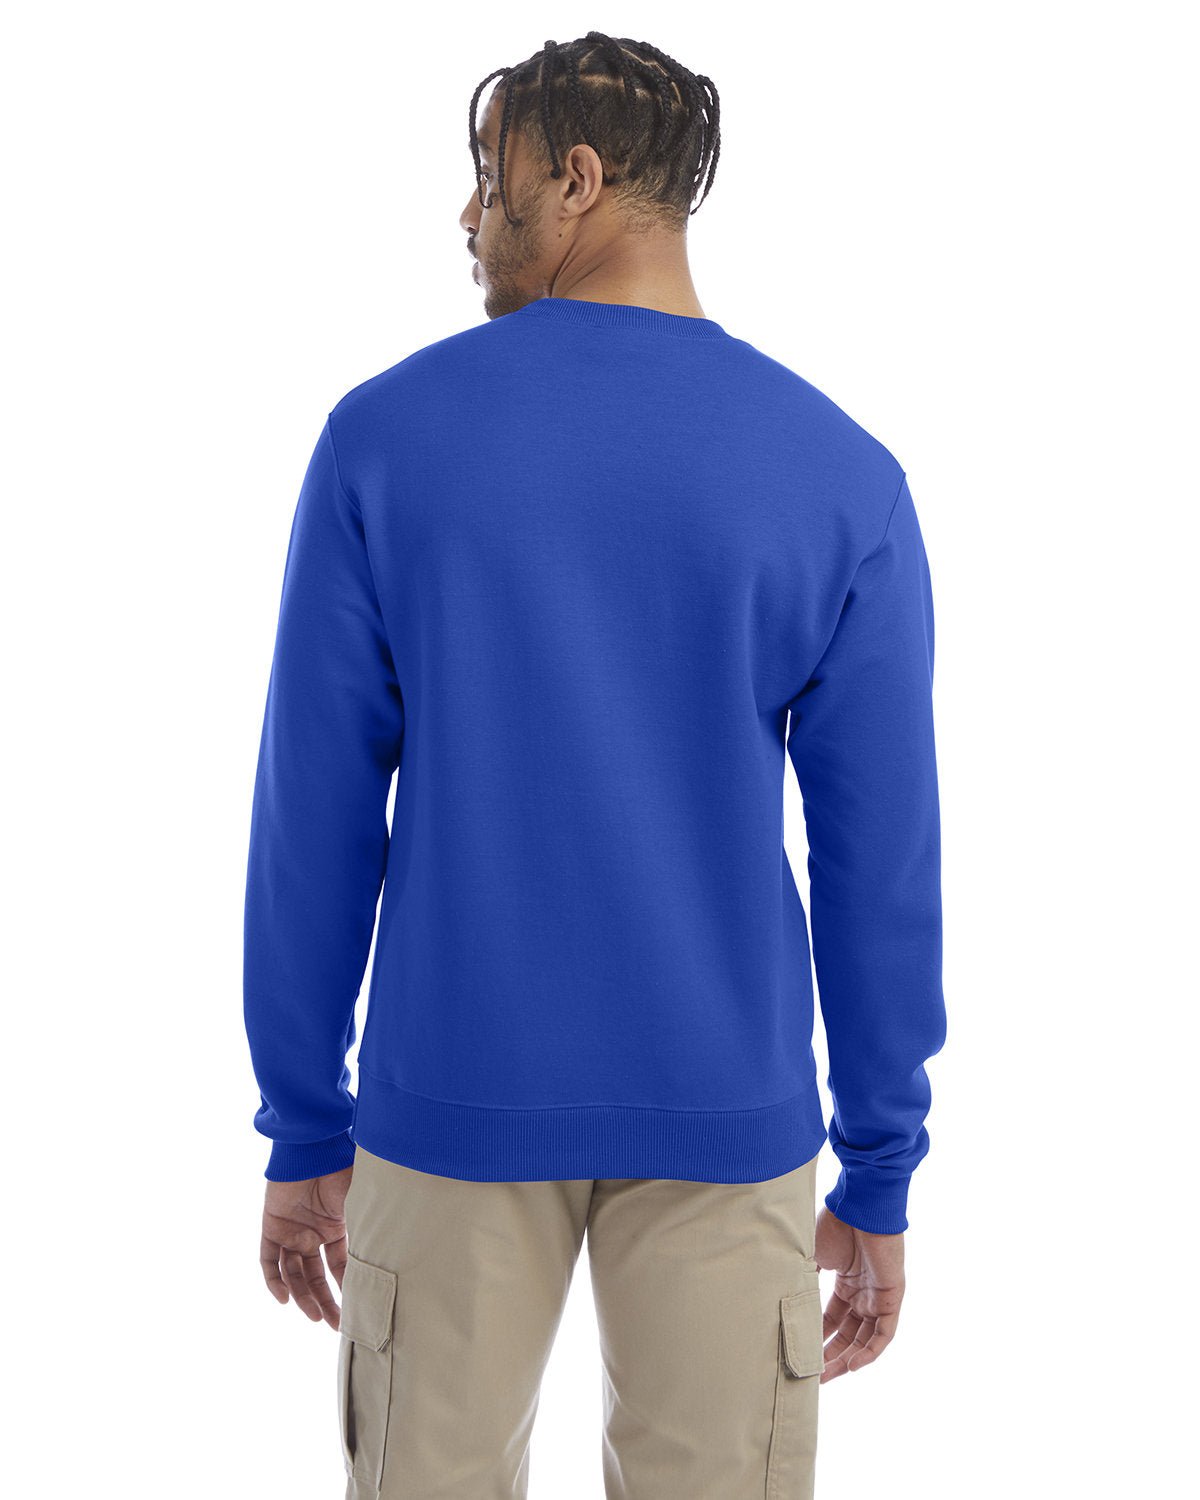 S600-Champion-ROYAL BLUE-Champion-Sweatshirts-2